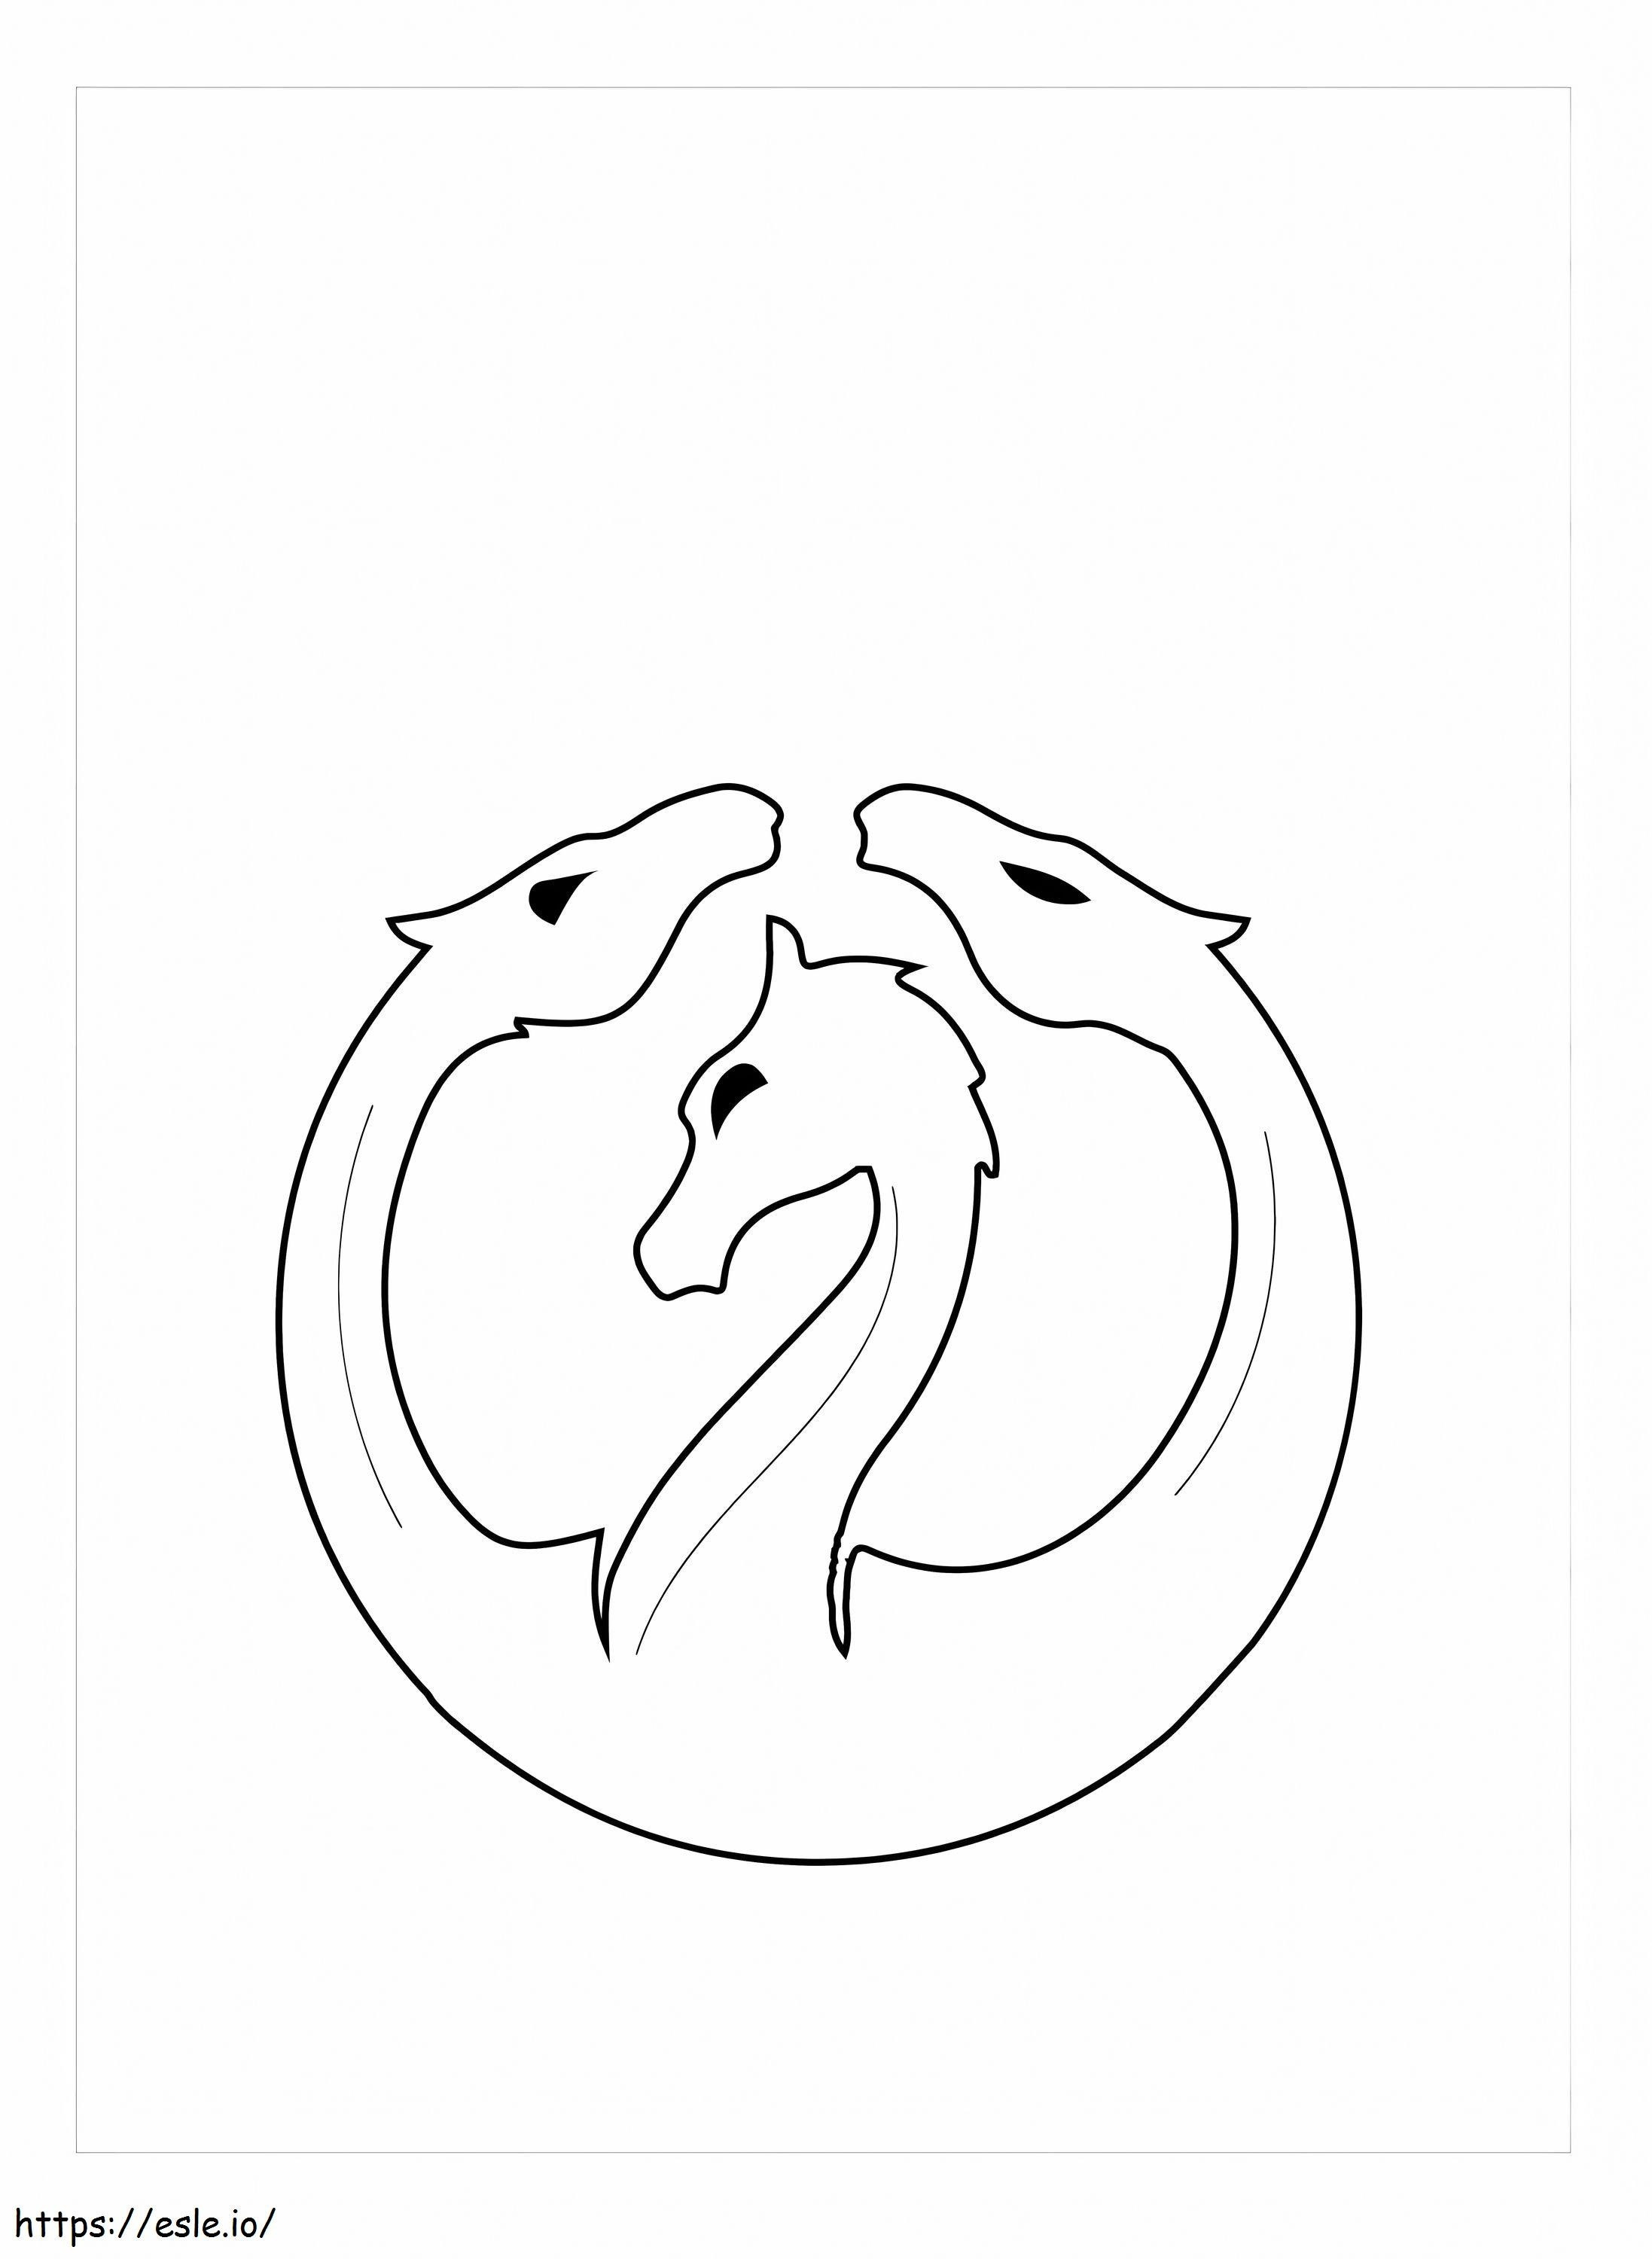 Coloriage Logo Hydra à imprimer dessin